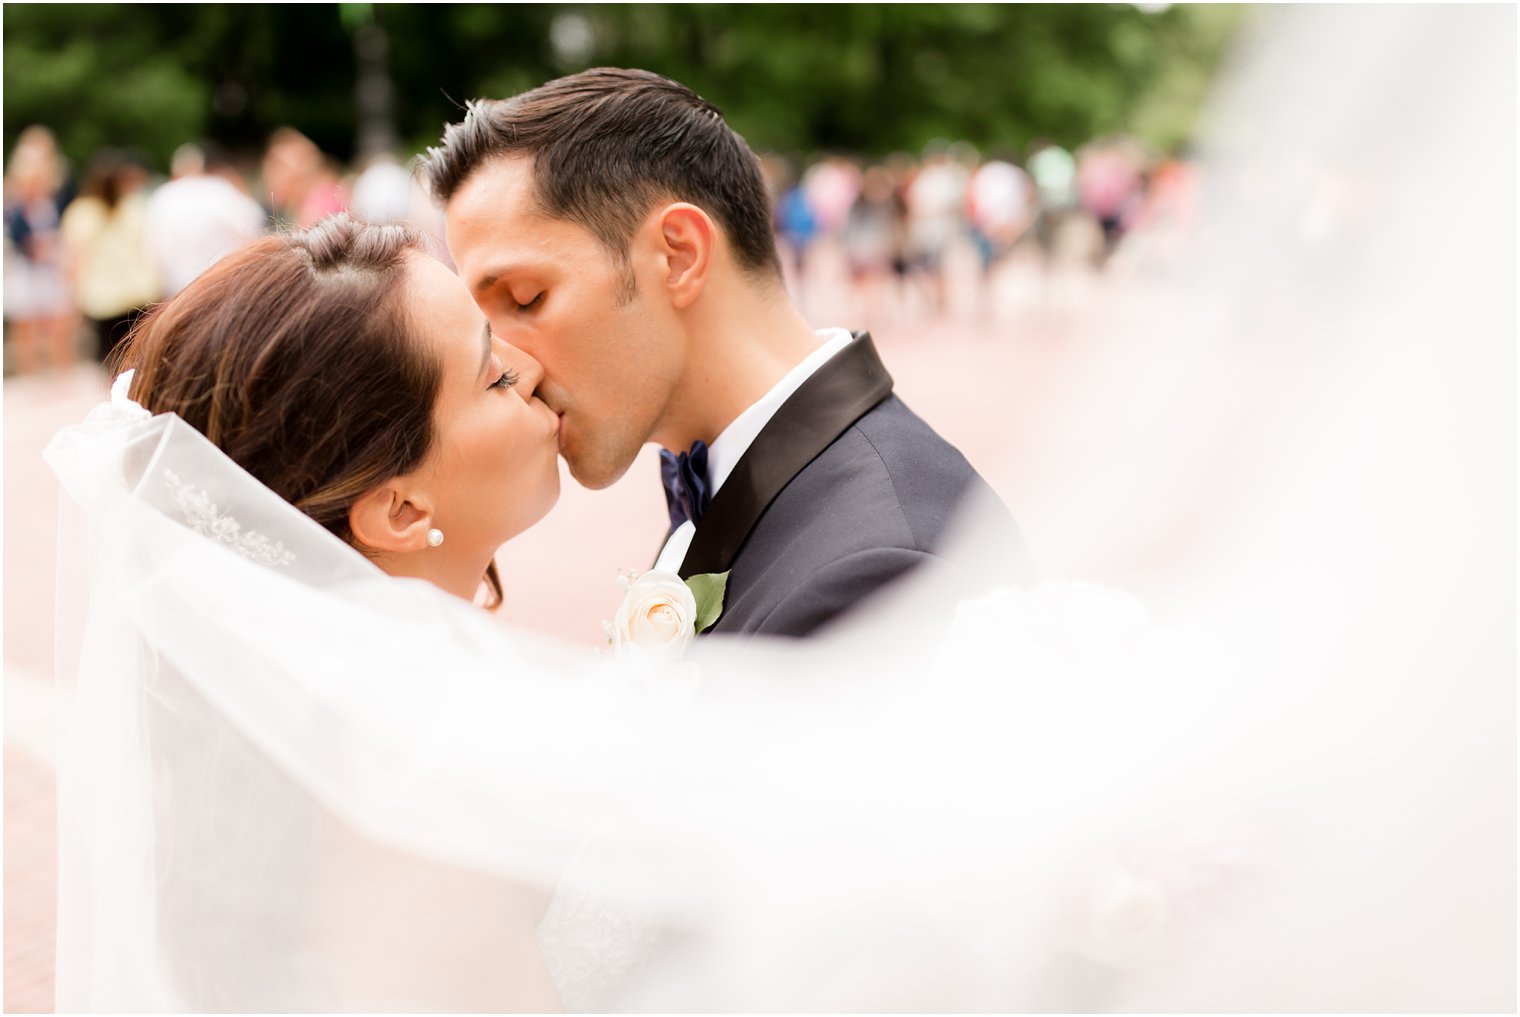 Romantic photo of bride and groom under veil | Photo by Idalia Photography